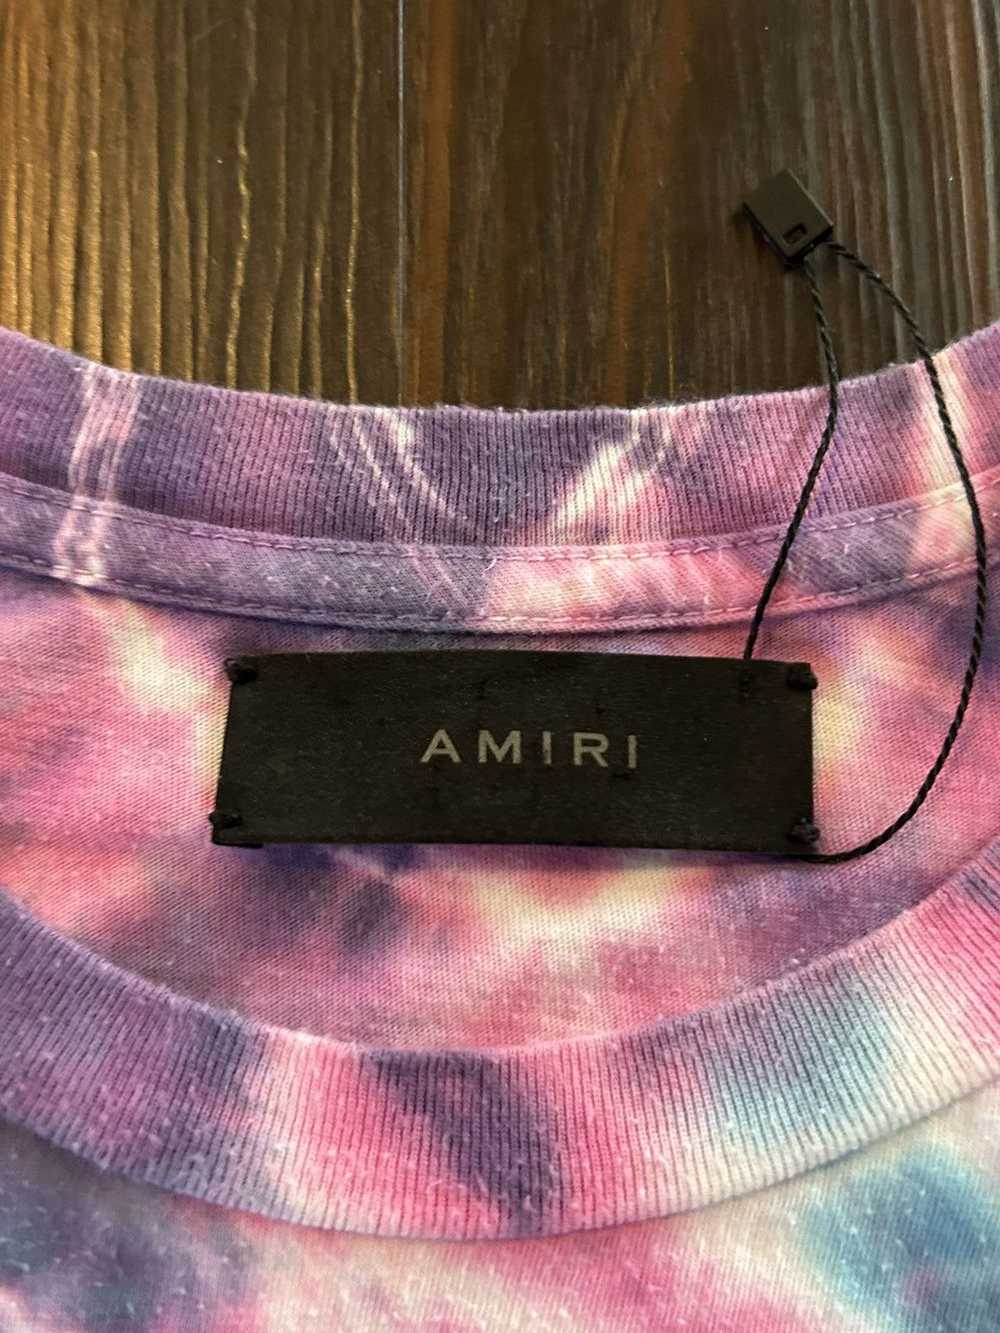 Amiri Amiri tie dye dove shirt - image 2